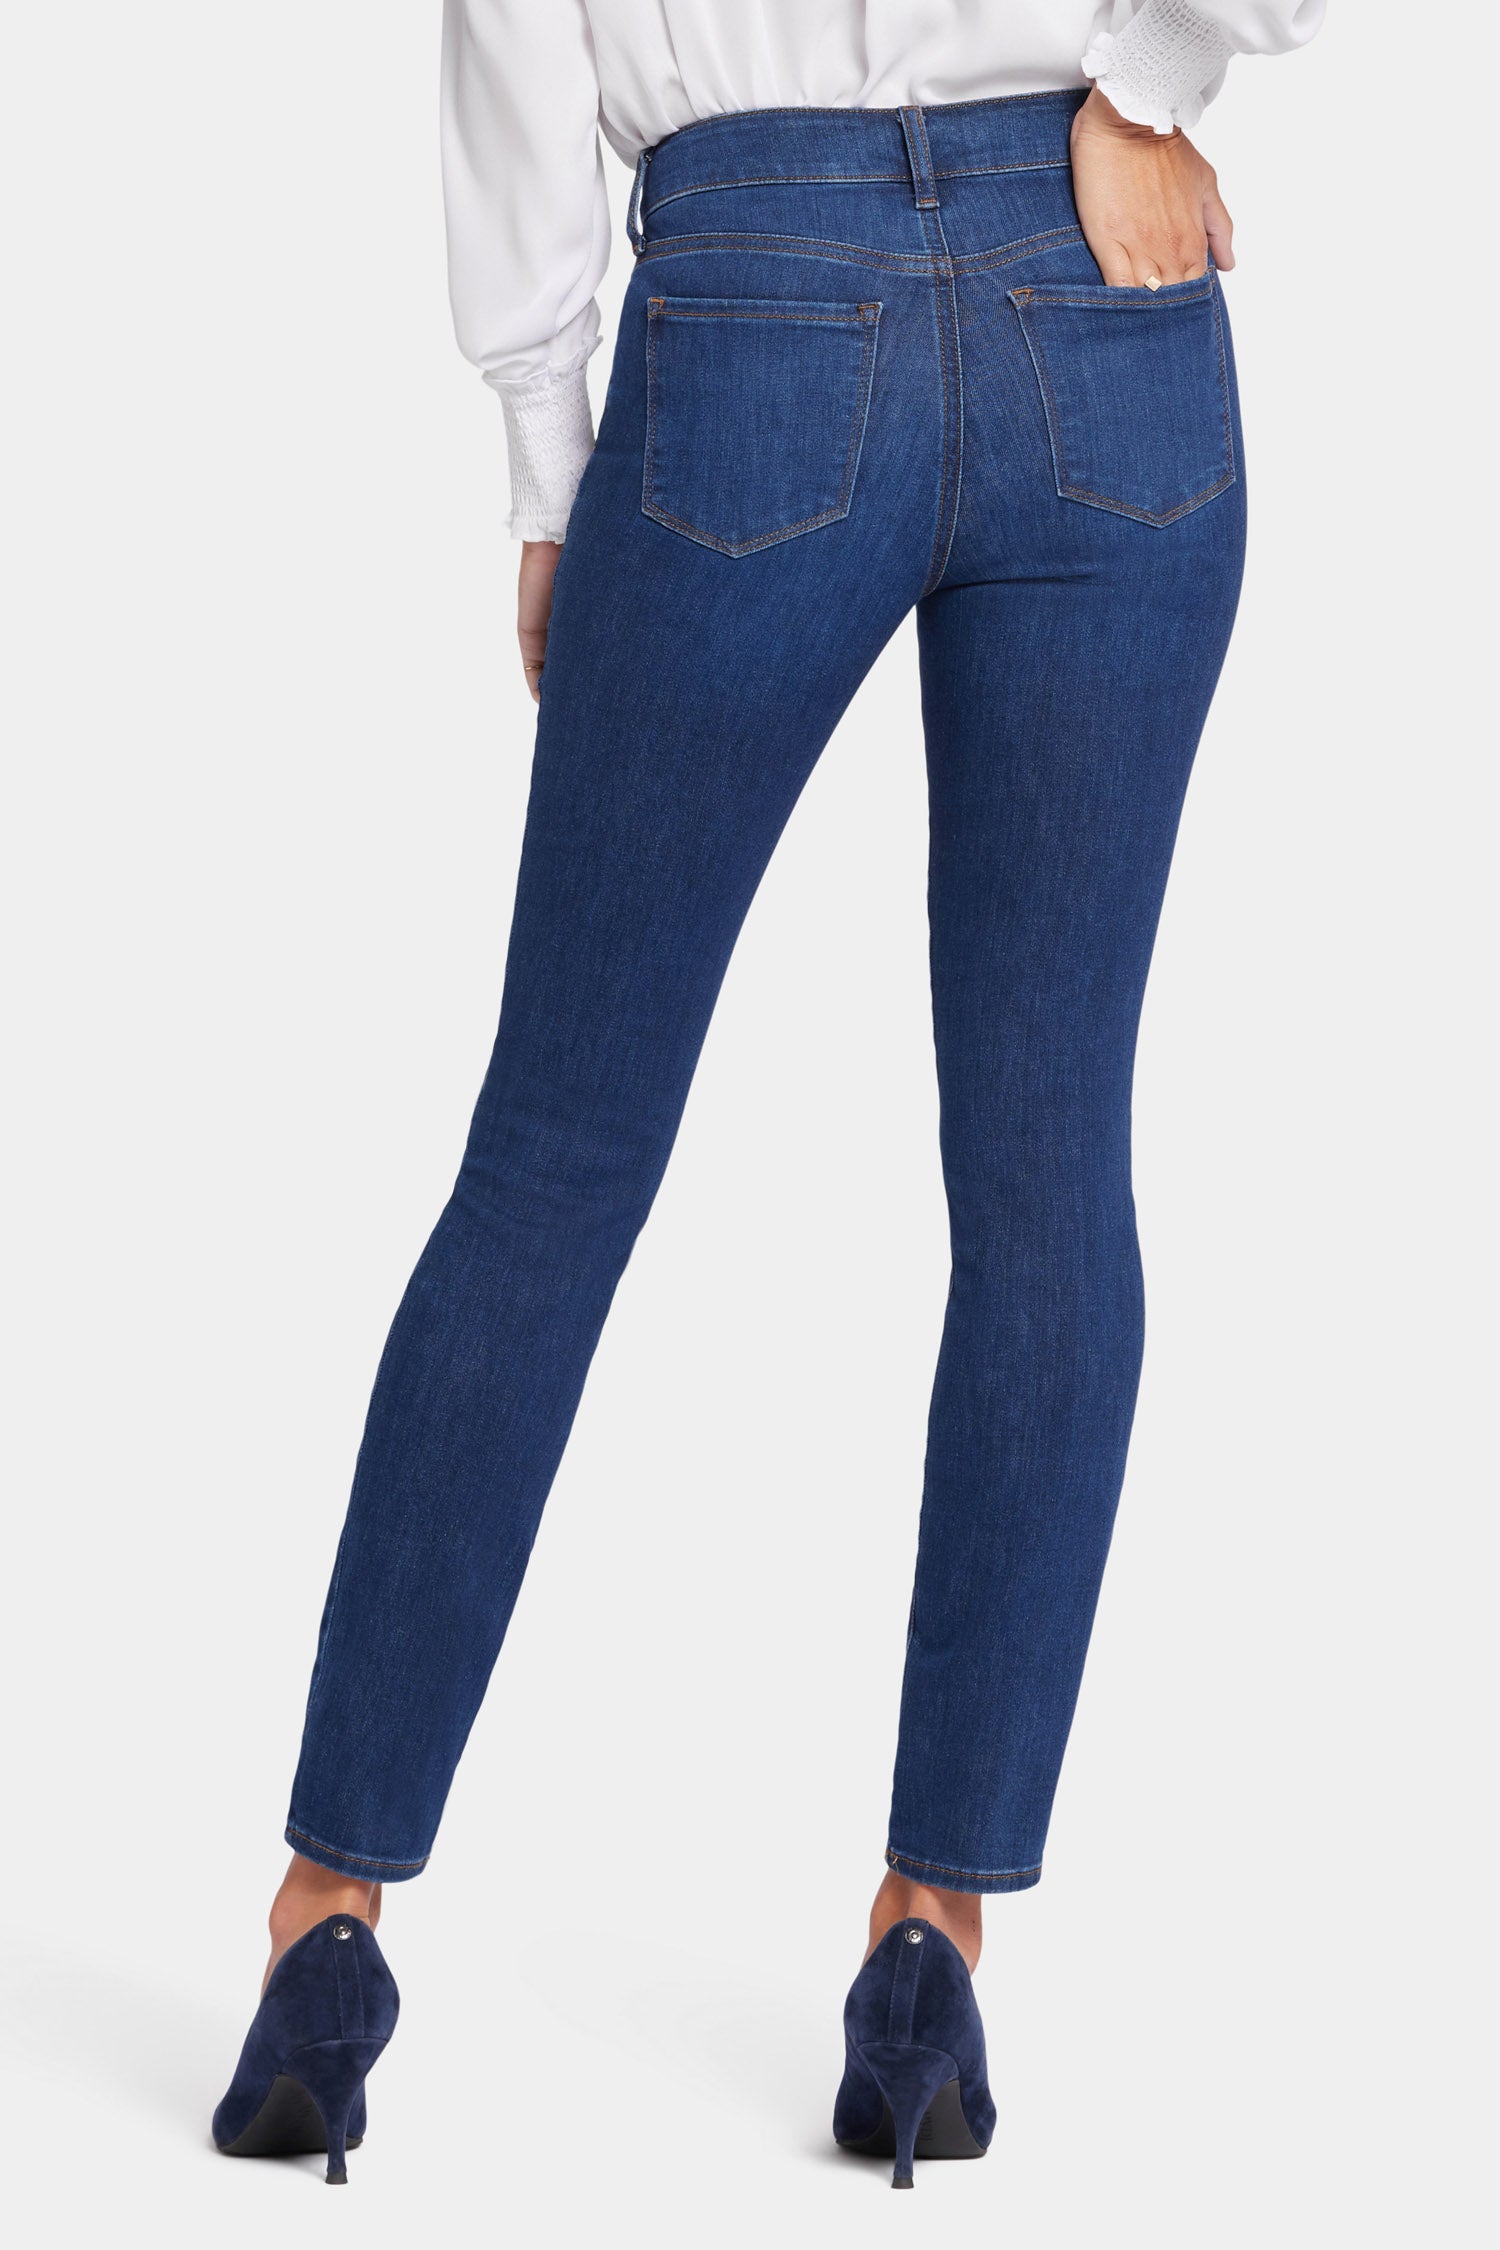 Ami Skinny Jeans - Cooper Blue | NYDJ